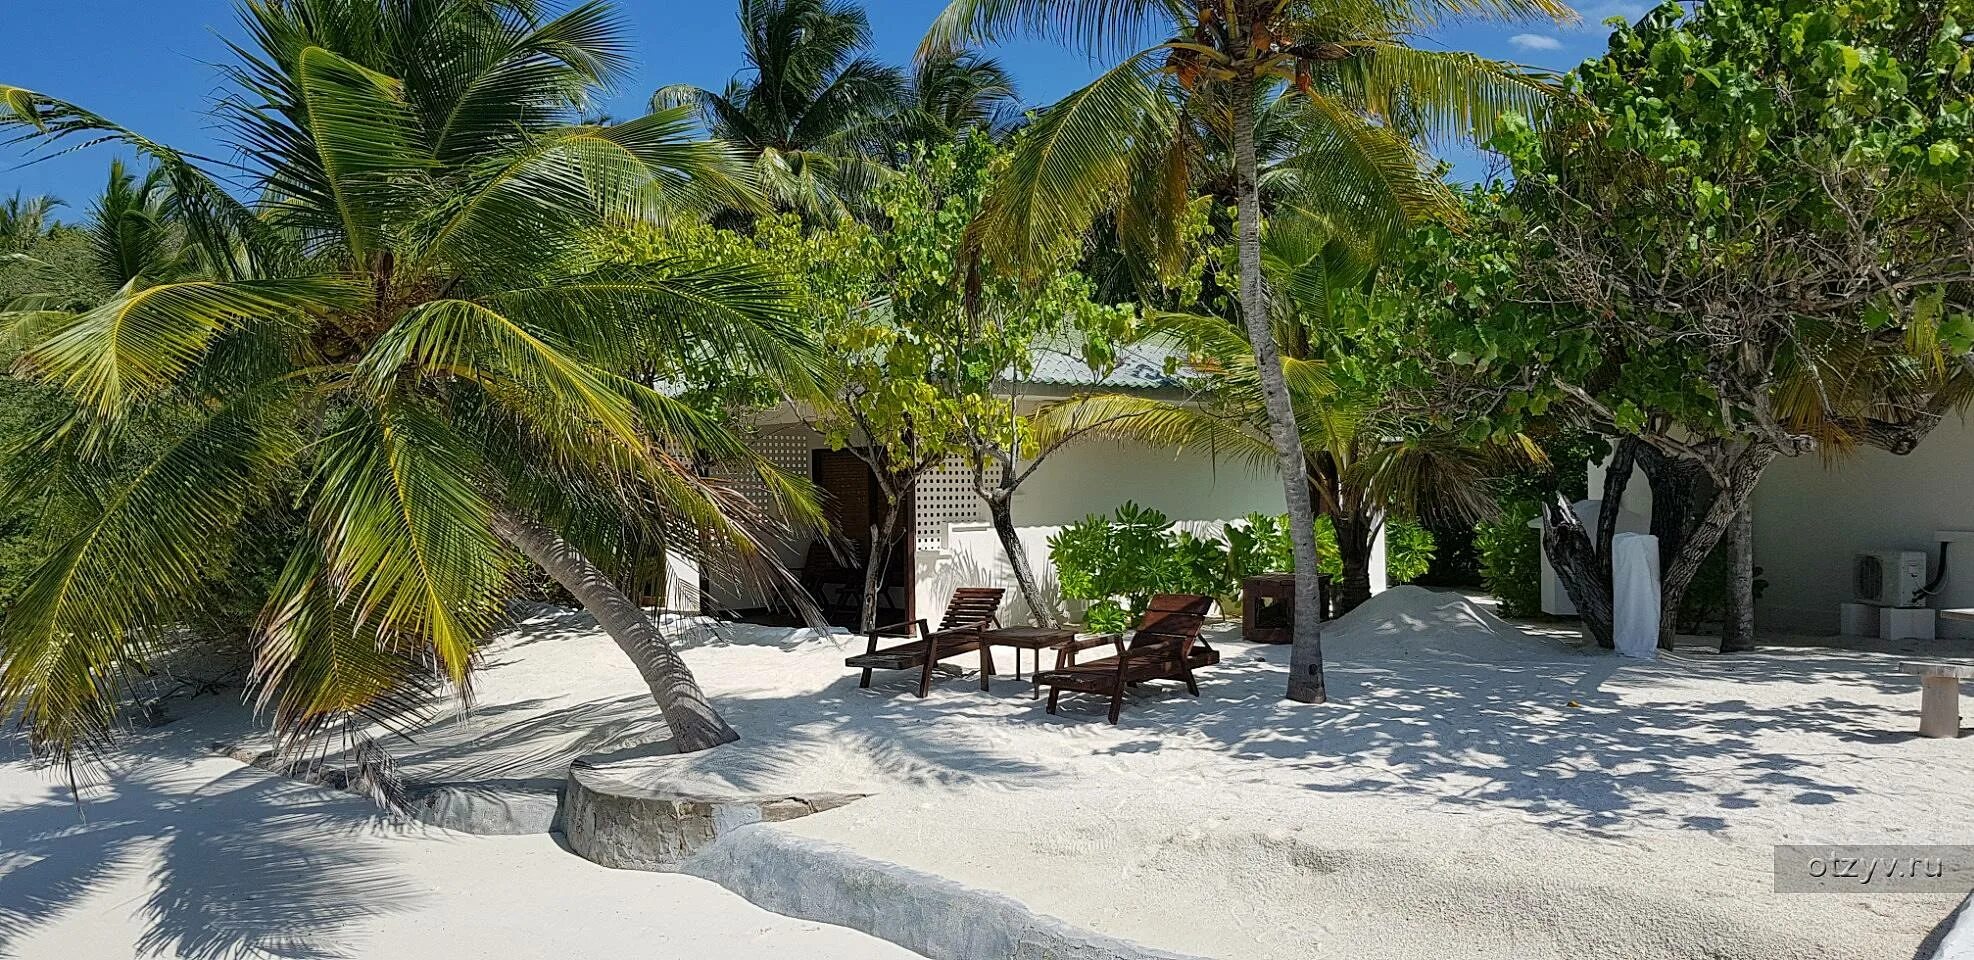 Eriyadu Island Resort 4*. Эрияду Мальдивы. Мальдивы в сентябре. Smartline Eriyadu, North male Atoll. Eriyadu island 4